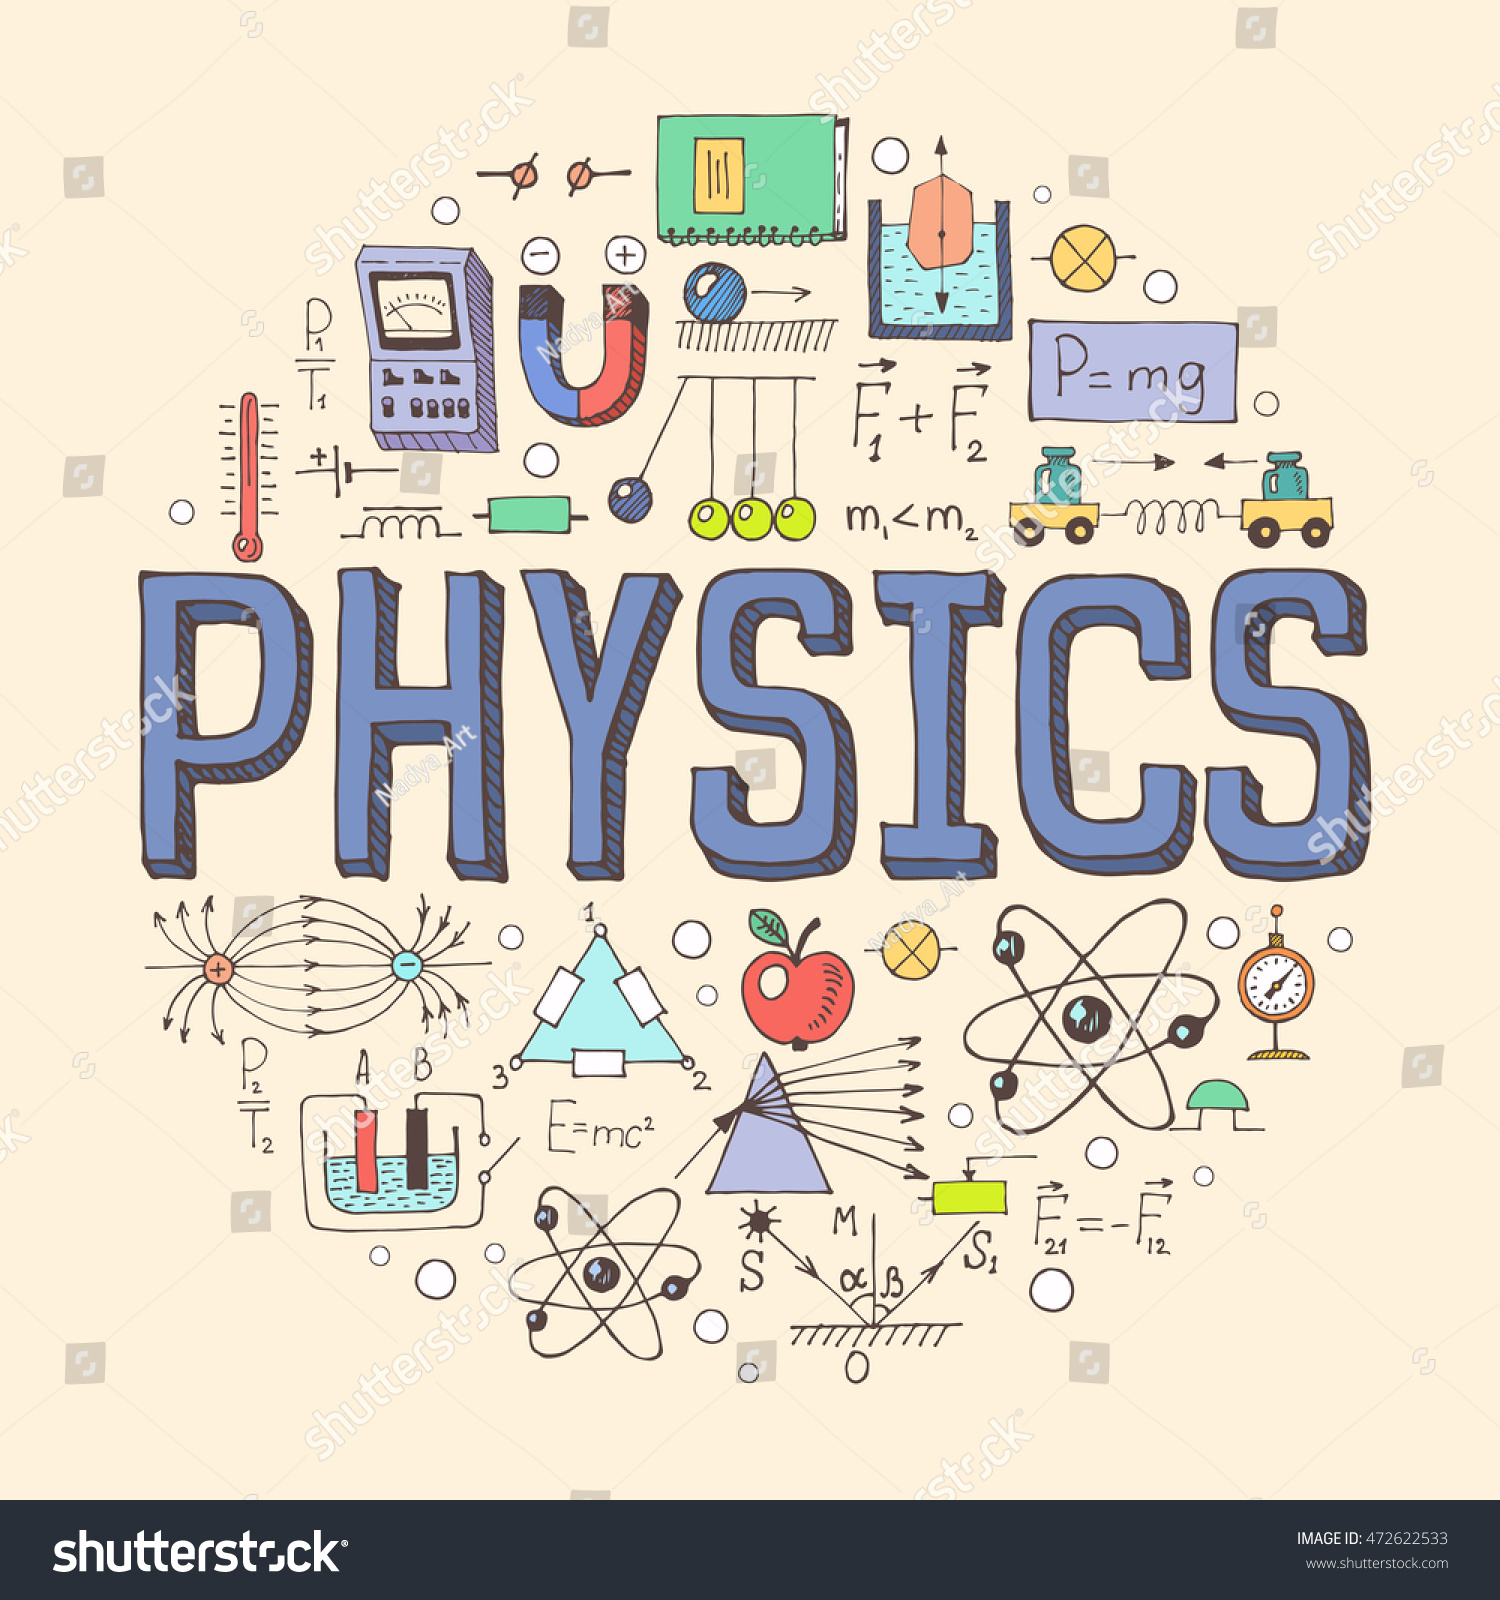 11+] Physics Backgrounds - WallpaperSafari